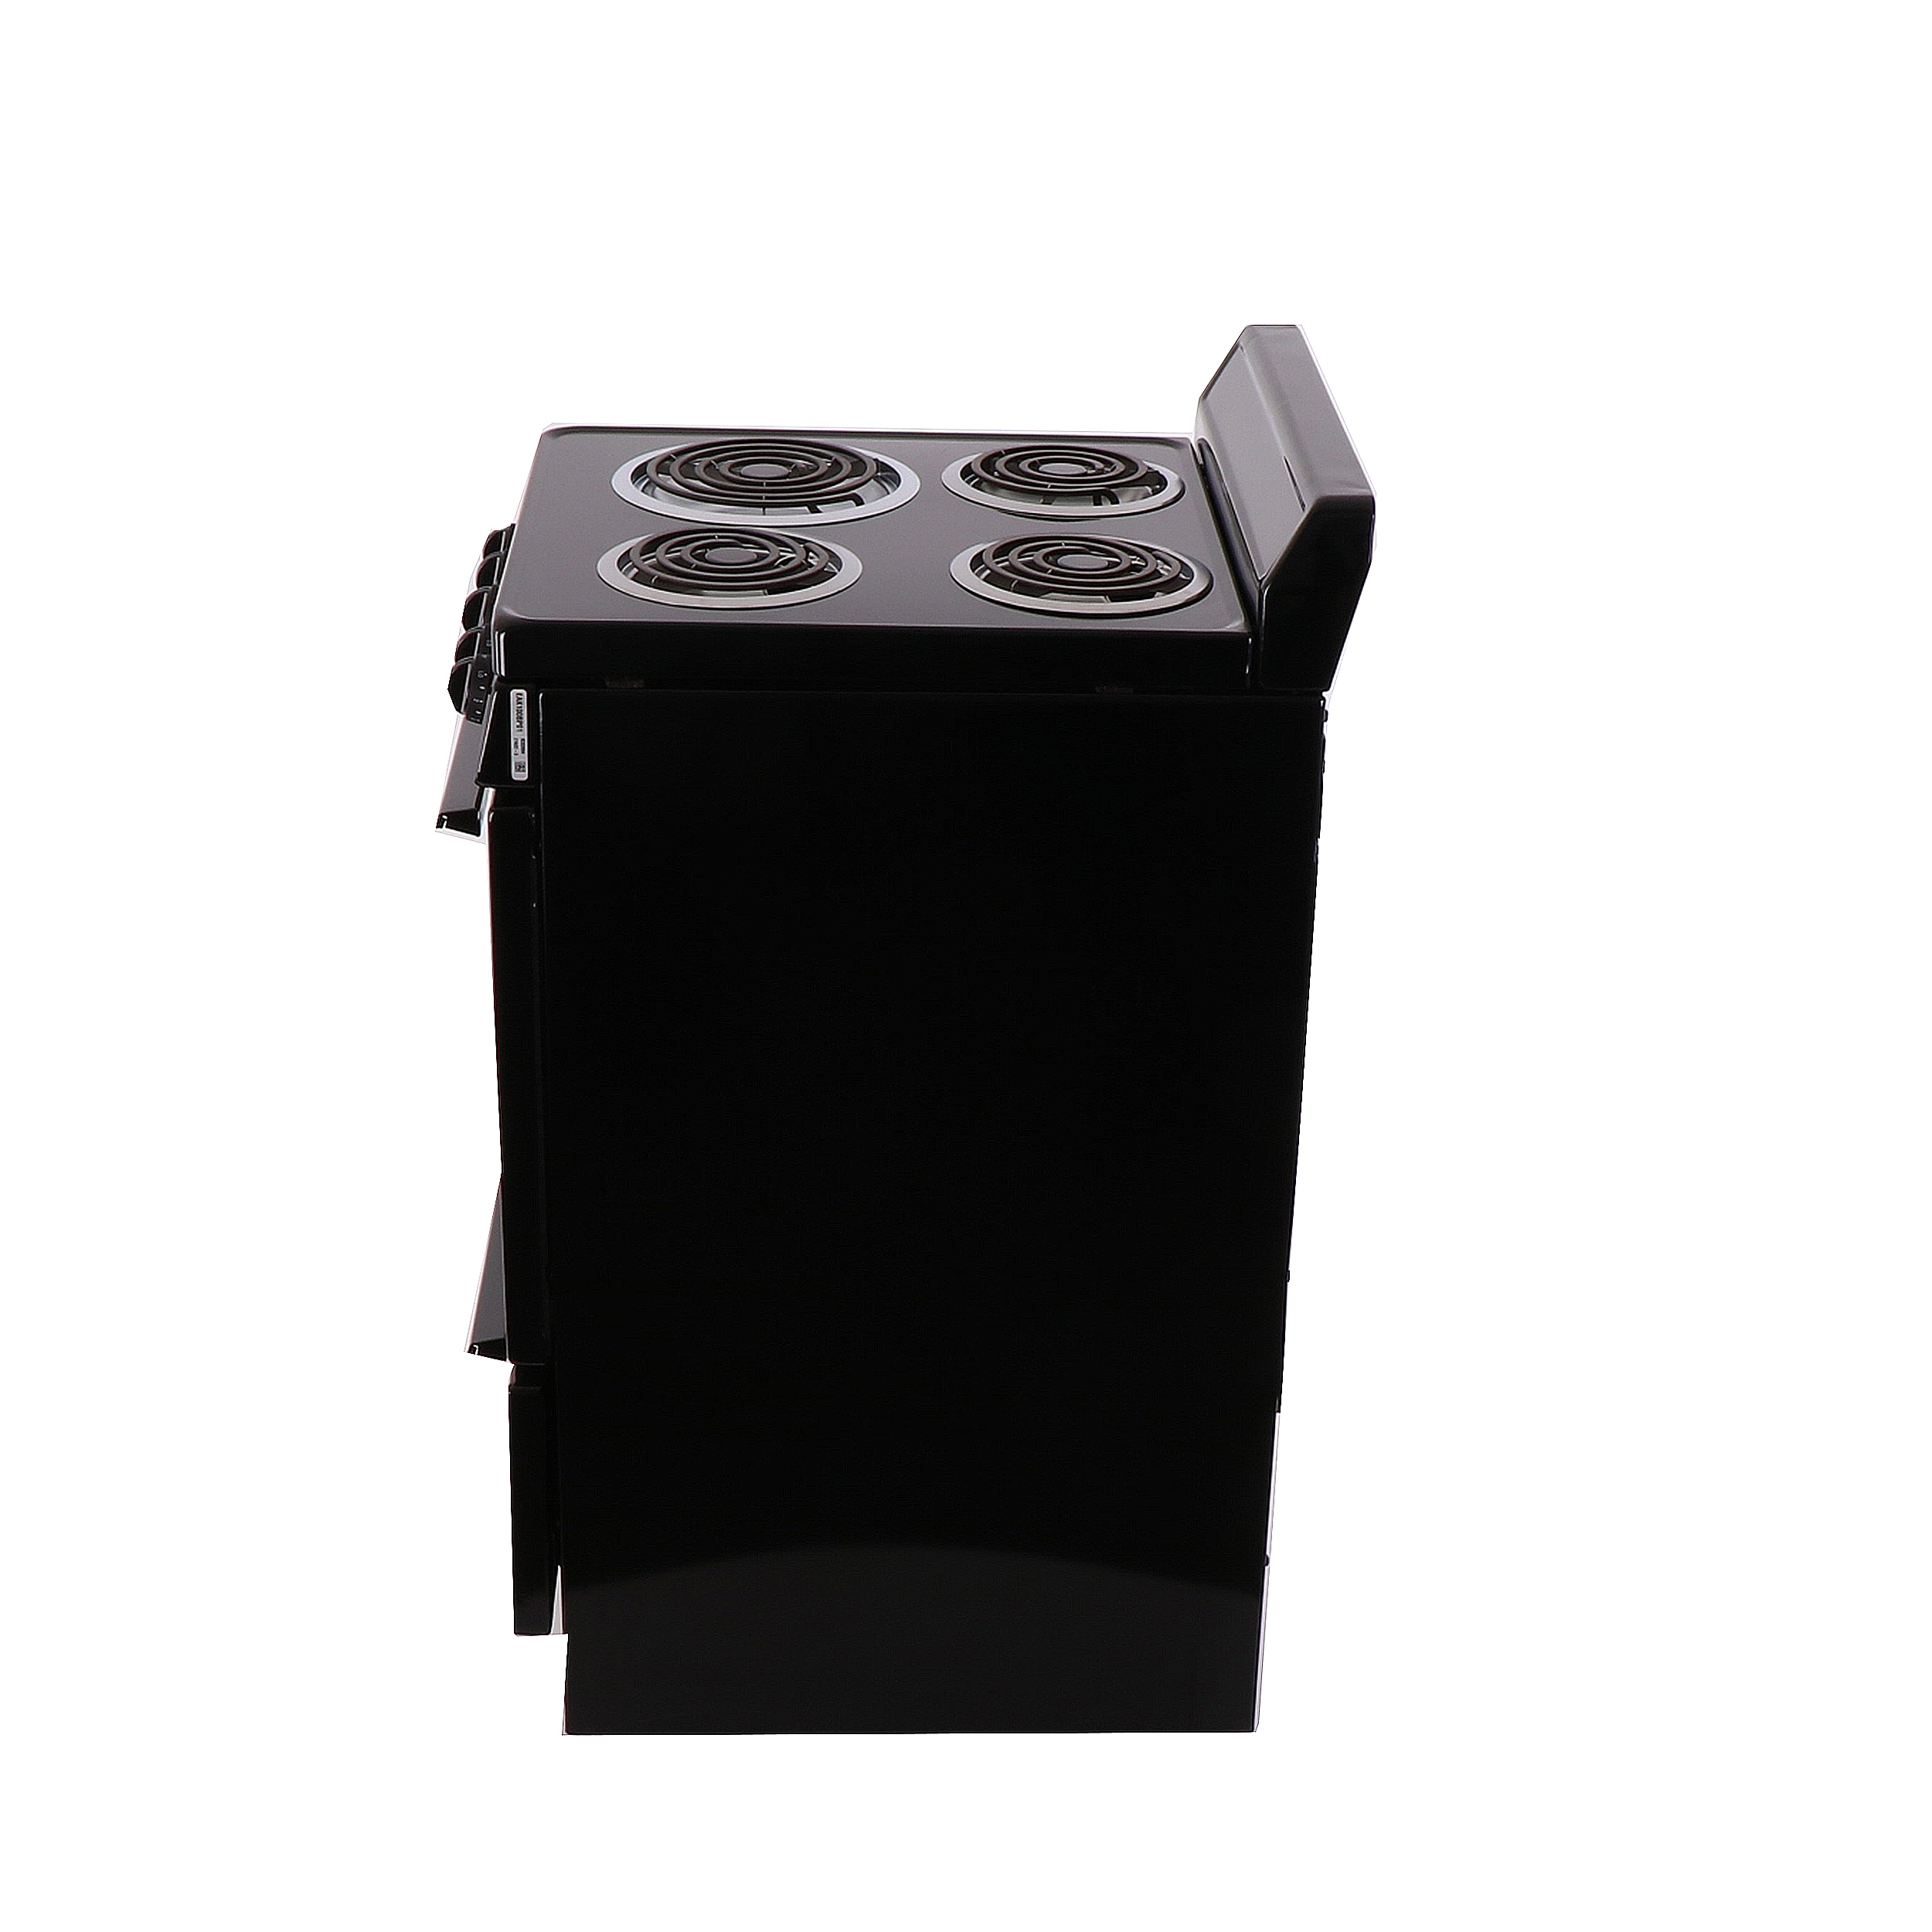 Premier EAK100BP 20 Inch Freestanding Electric Range with 4 Coil Elements,  2.4 cu. ft. Capacity, 2 Adjustable Oven Racks, 4 Inch Porcelain Backguard  and ADA Compliant: Black